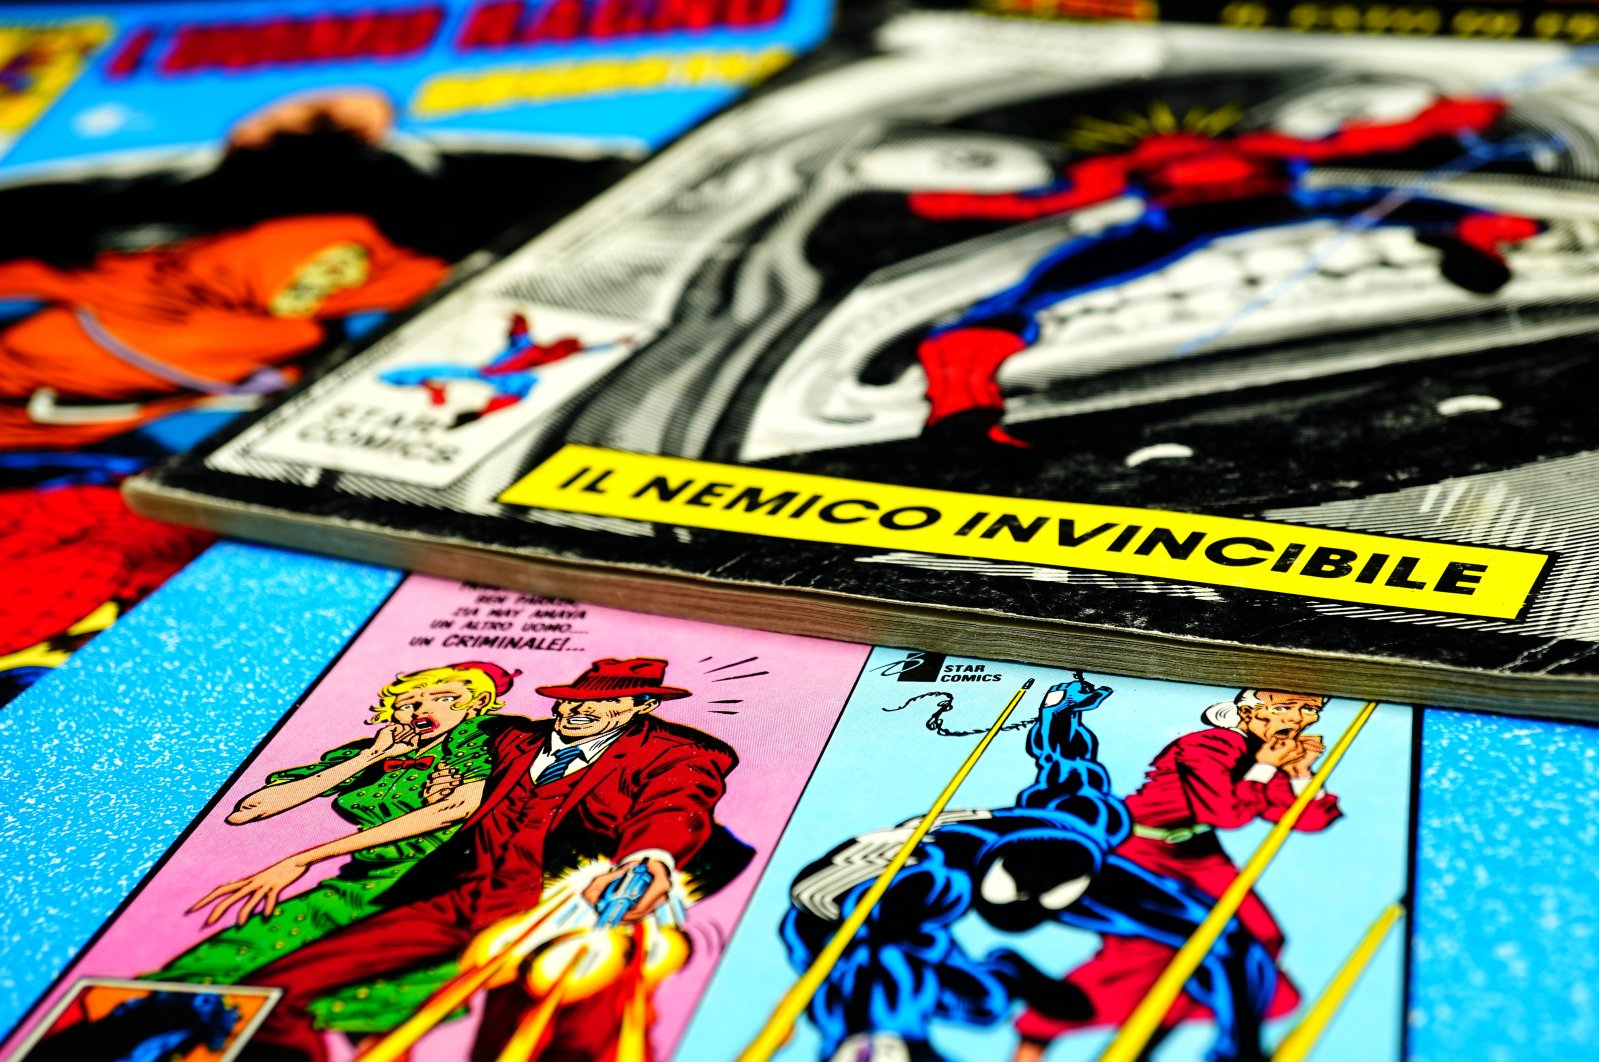 Italian edition of Spider-Man comics. (Shutterstock Photo)